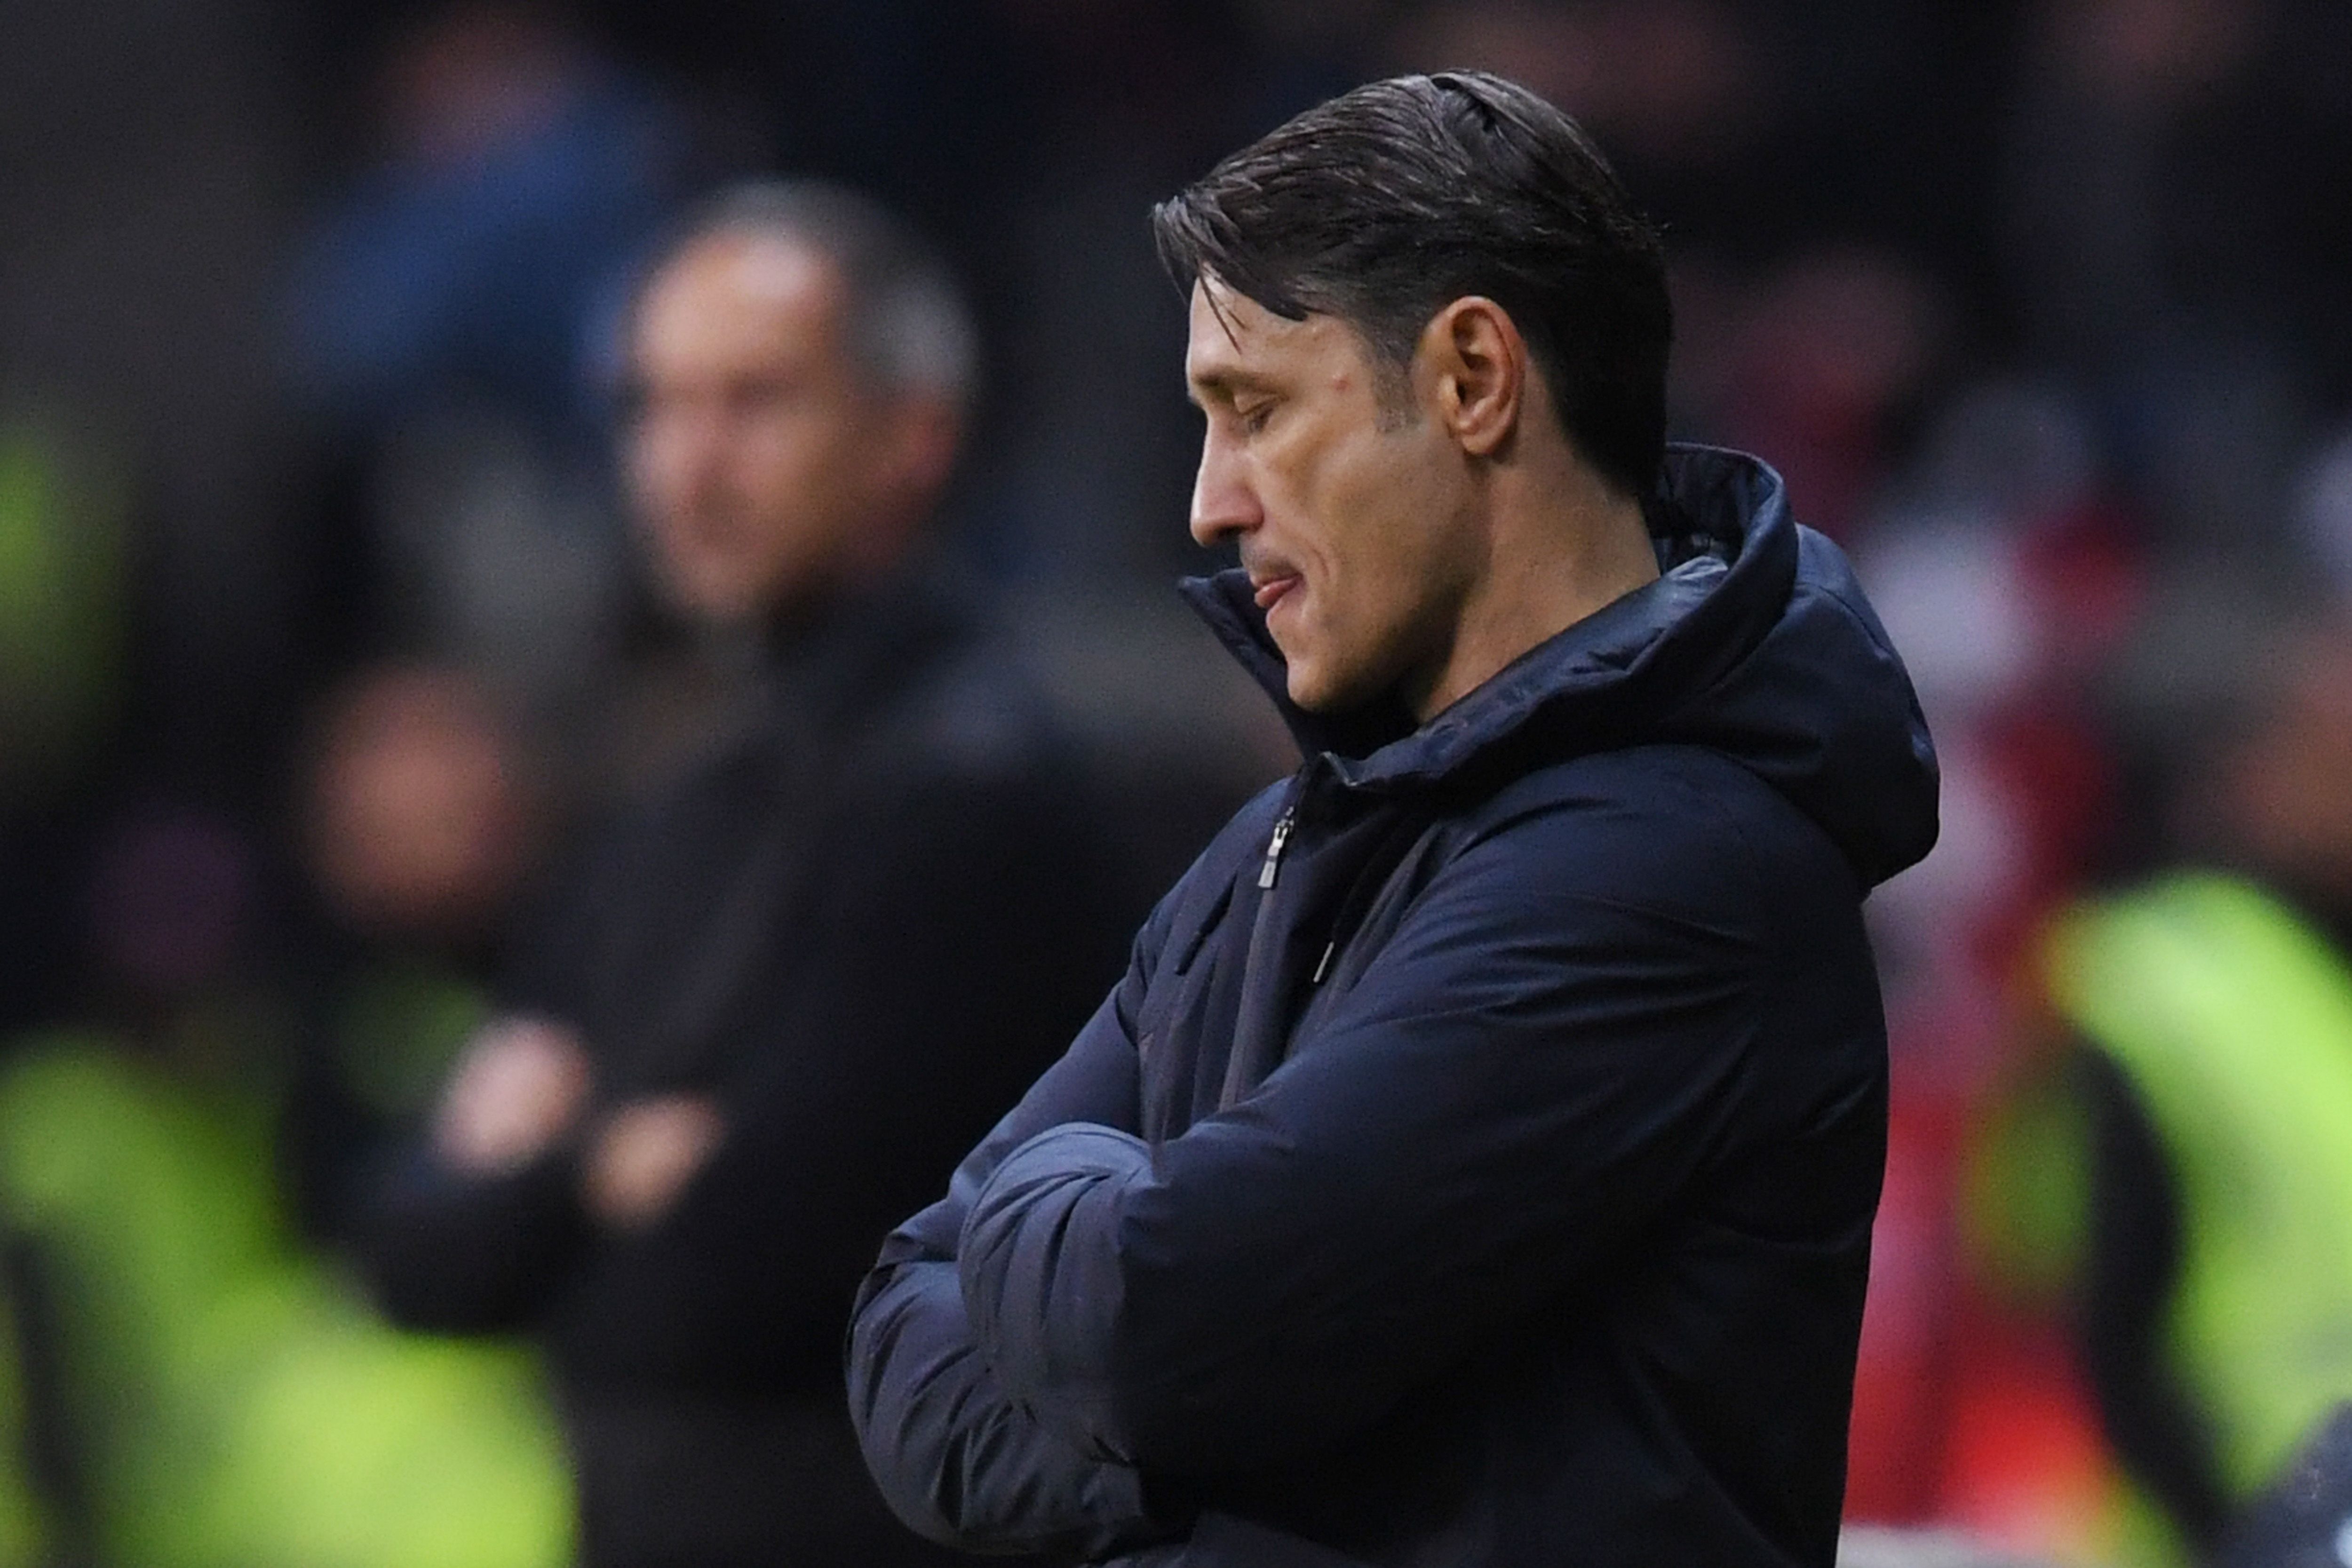 Seguir Doctor en Filosofía acceso Bayern Munich sack struggling manager Niko Kovac after 5-1 defeat | CNN